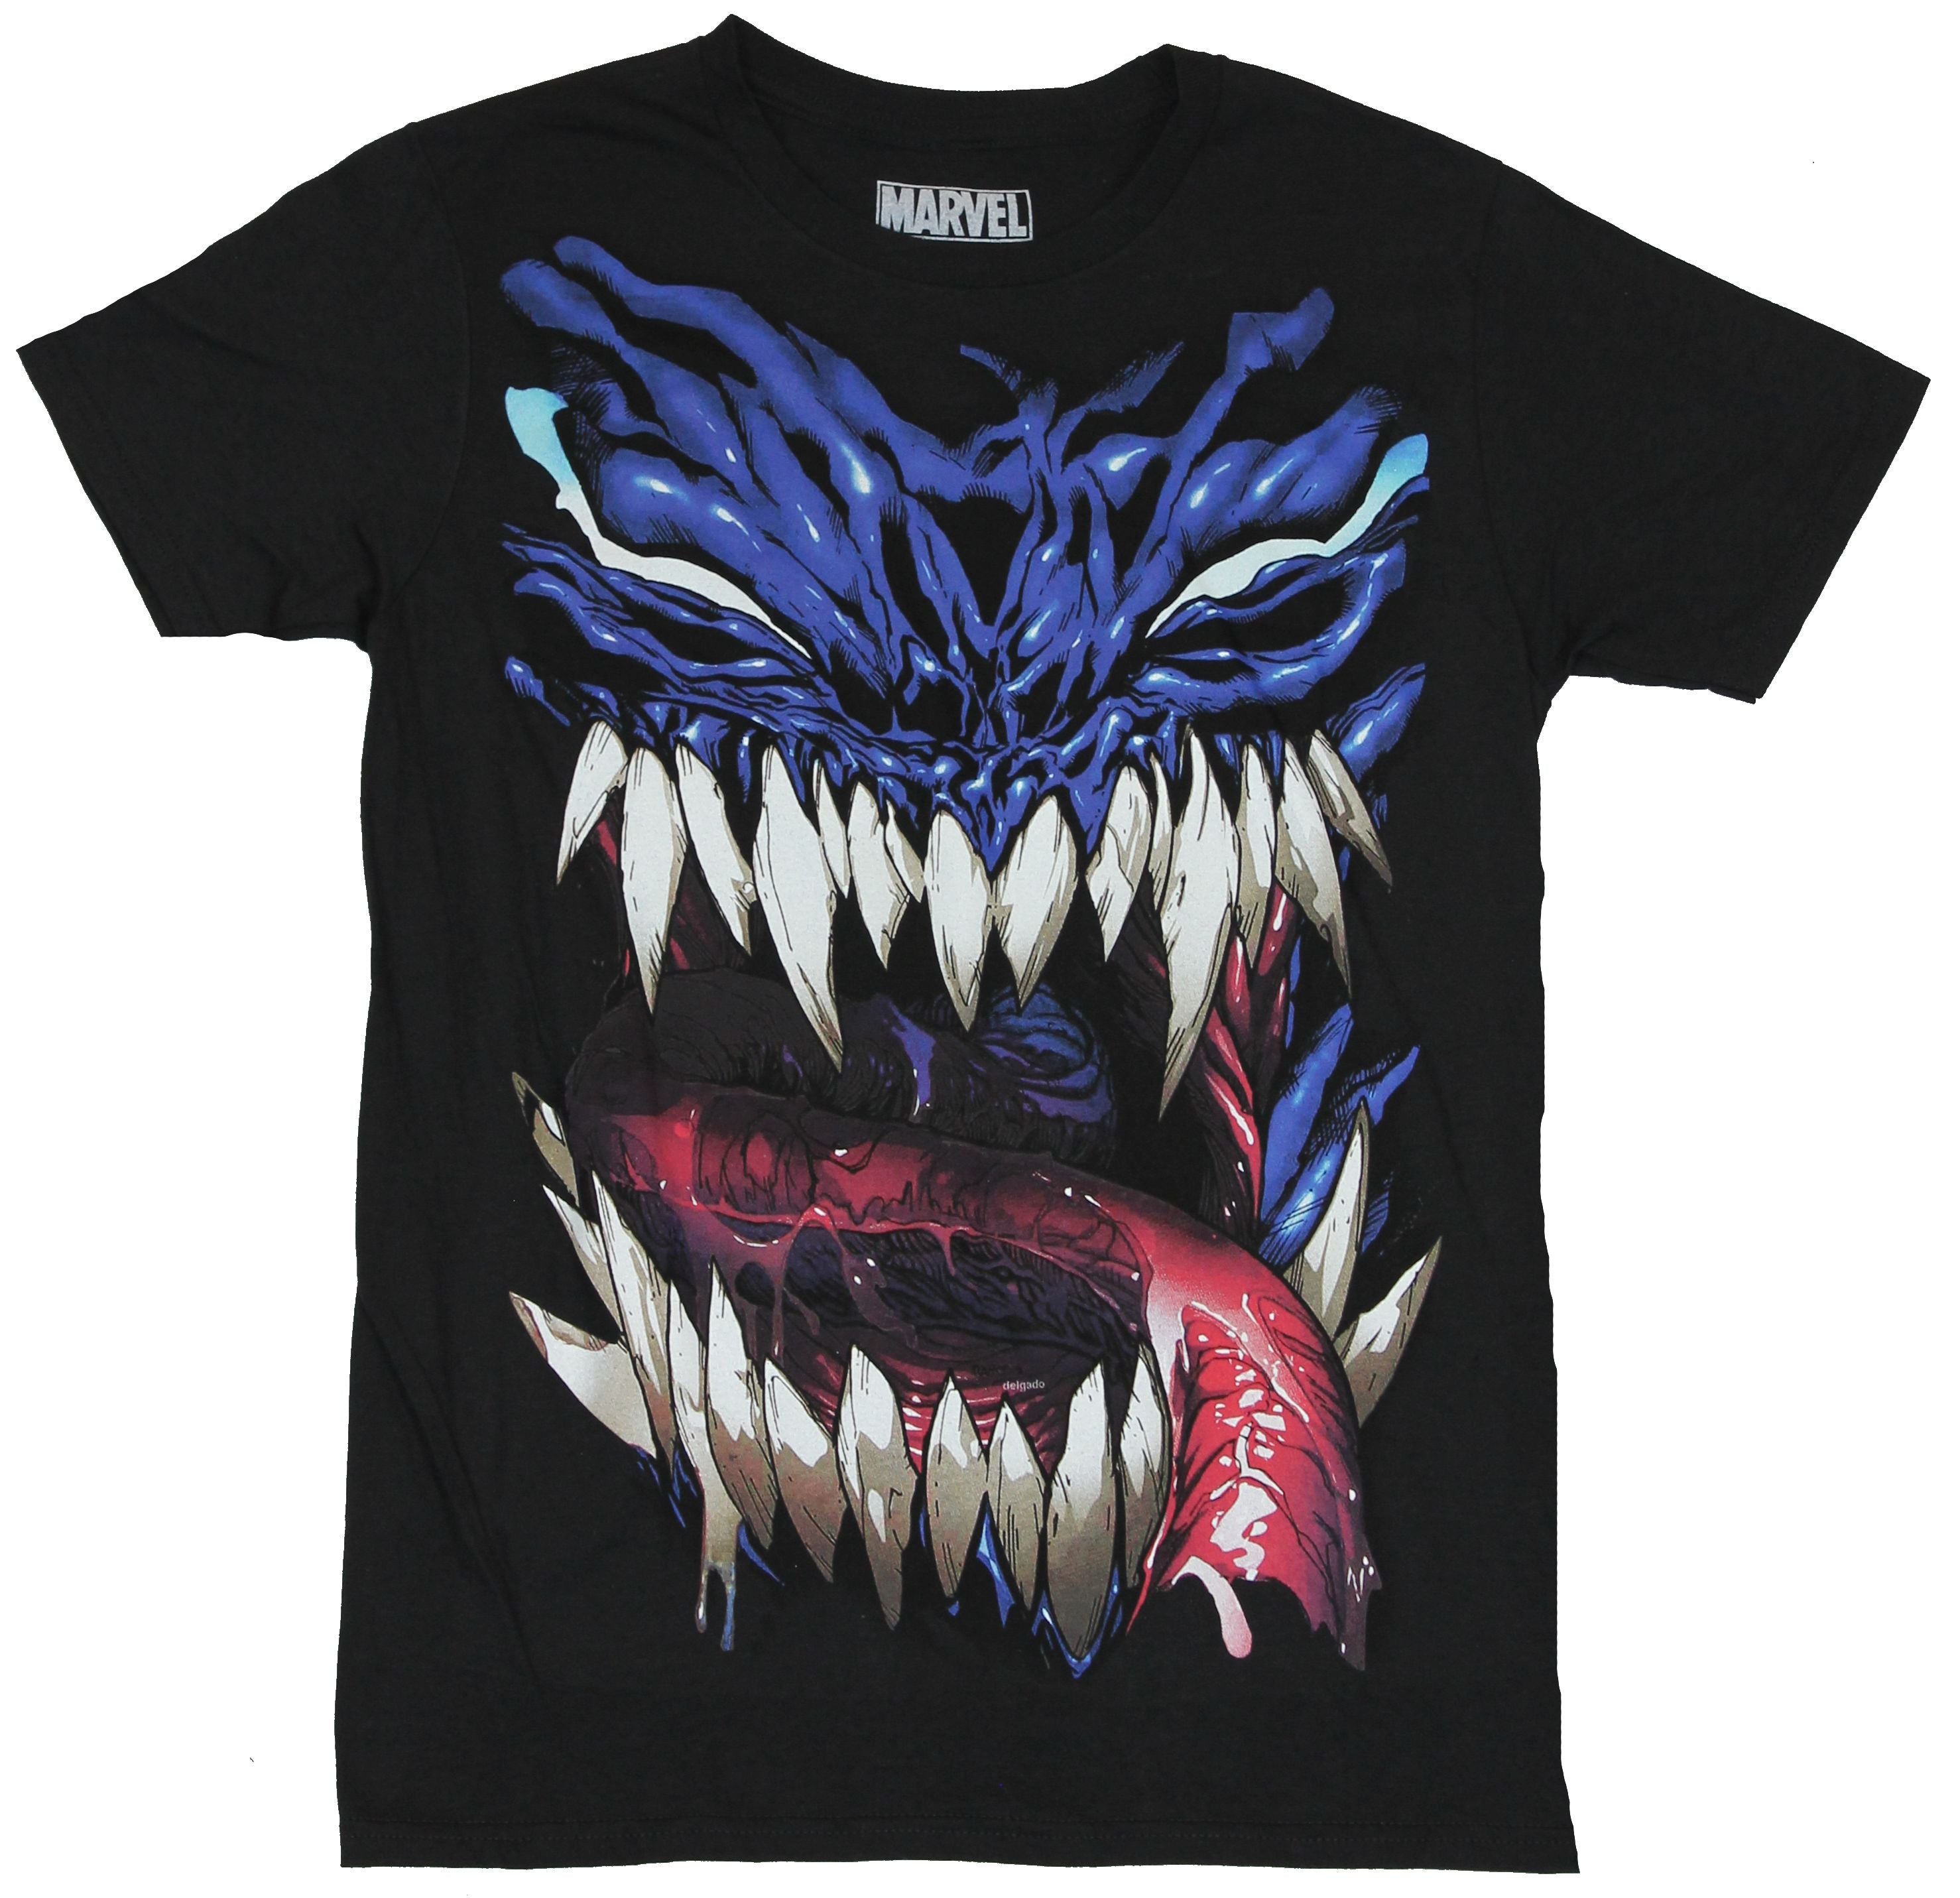 Venom (Marvel Comics)  Mens T-Shirt - Giant Toothy Venom Mouth Image